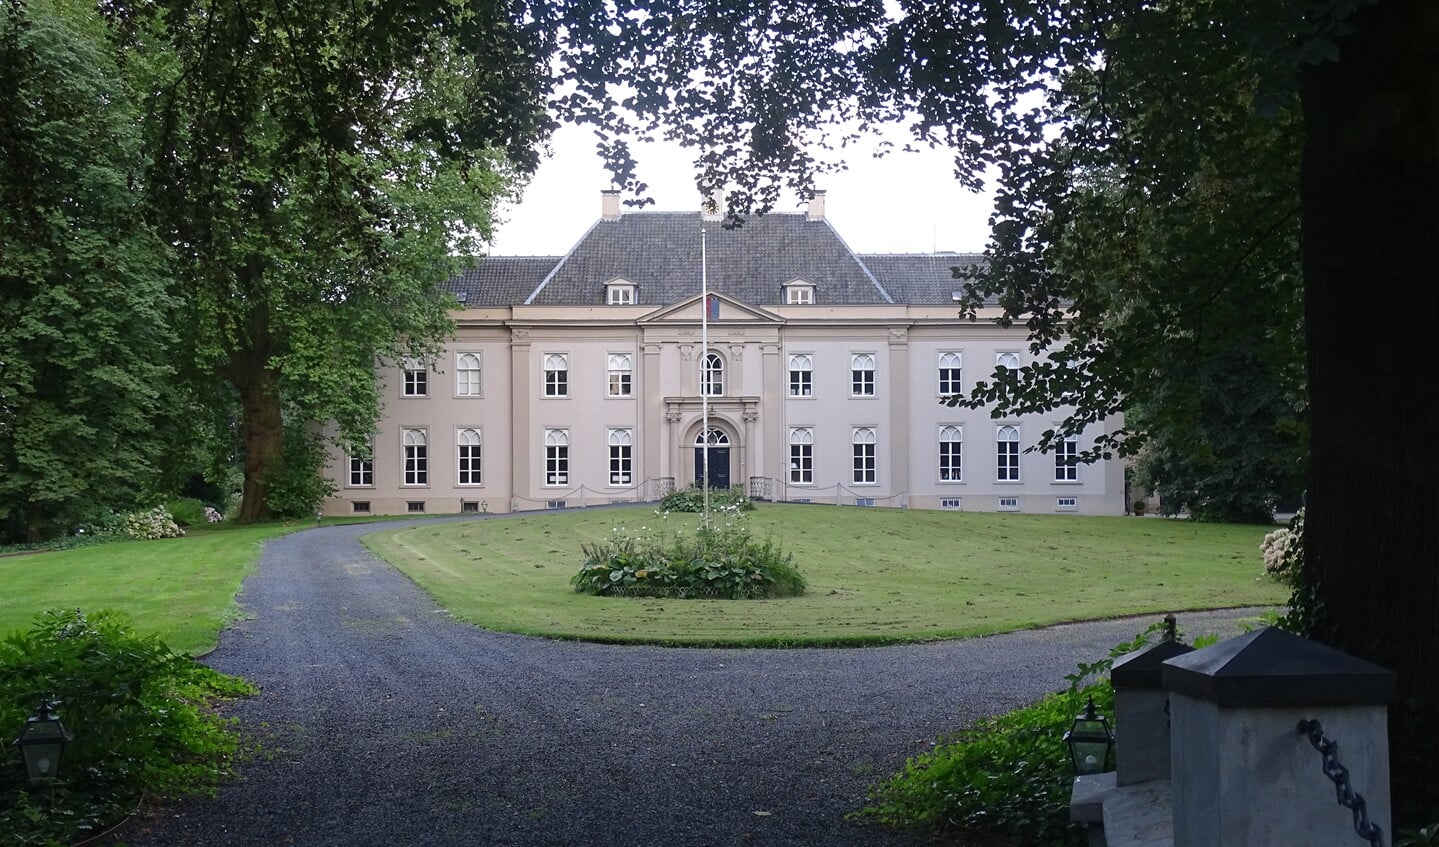 Huis Landfort in Megchelen. Foto: Pauline Redlich